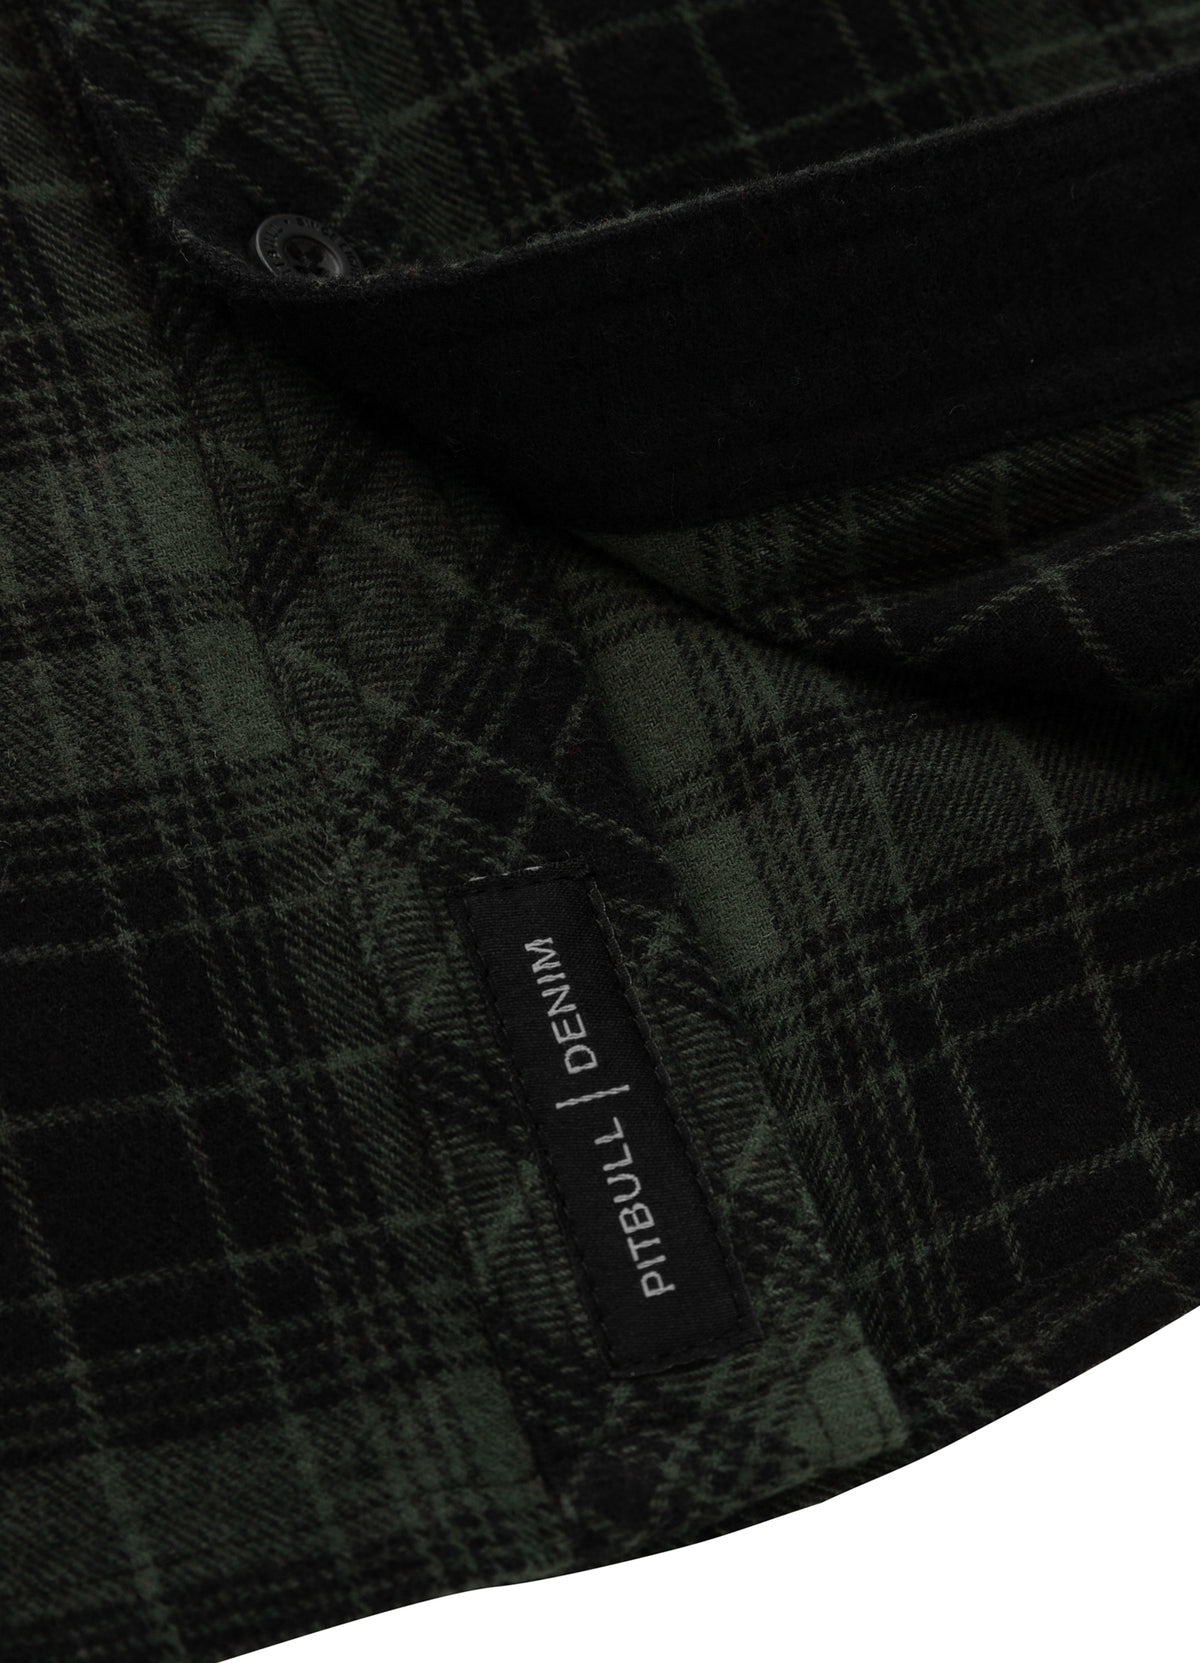 MITCHELL Green/Black Flannel Shirt